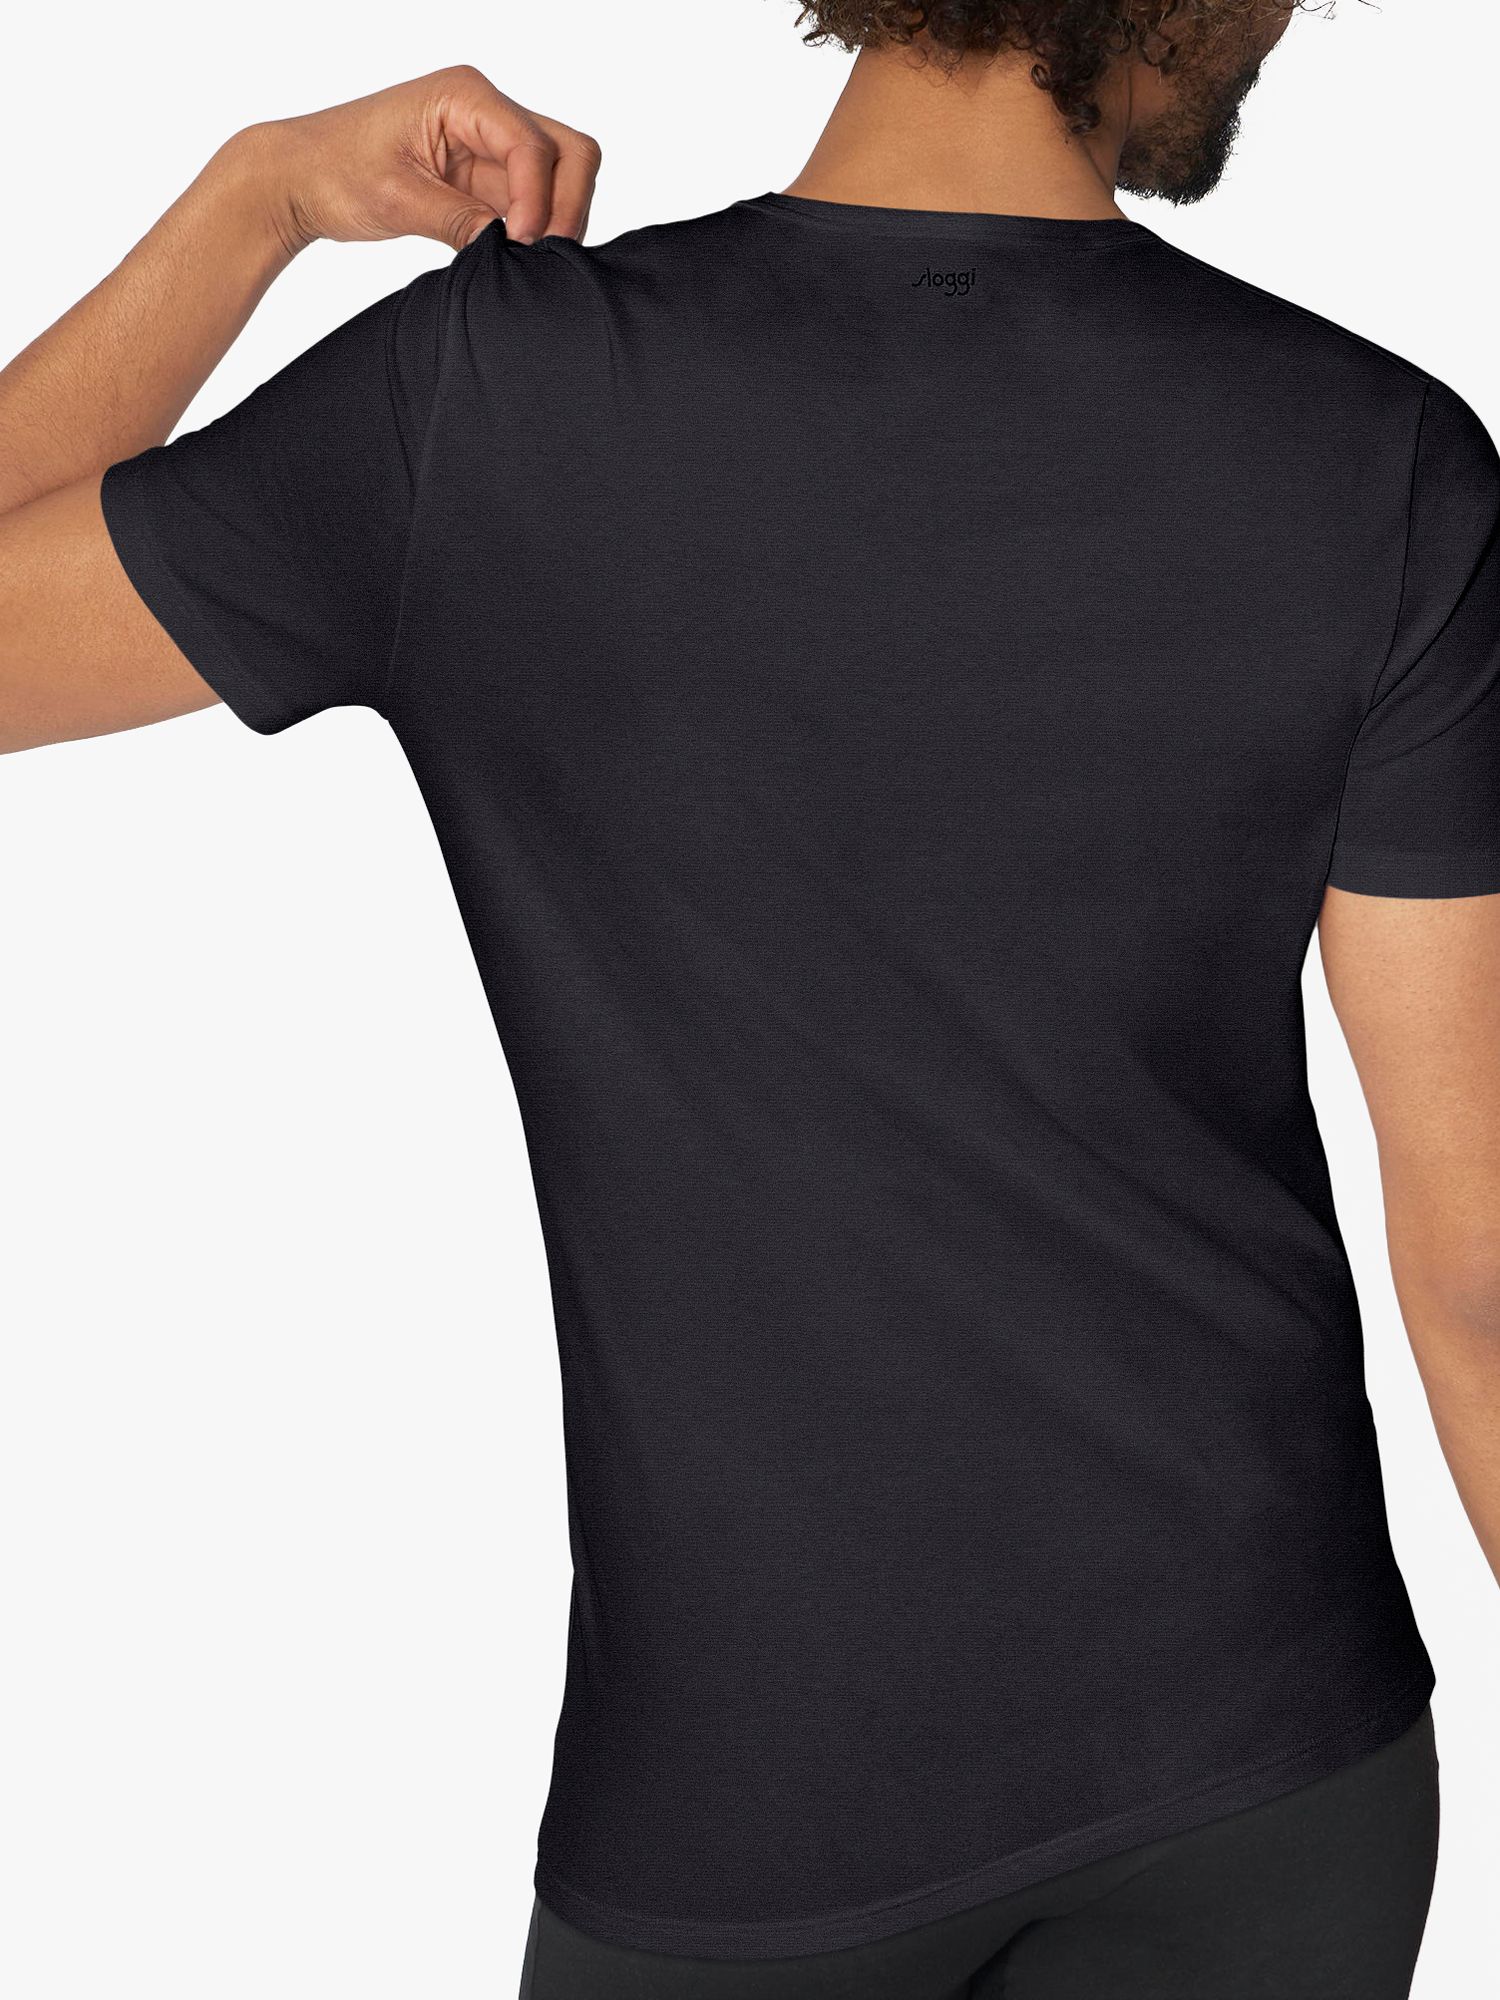 sloggi GO Jersey Short Sleeve Lounge T-Shirt, Black, S